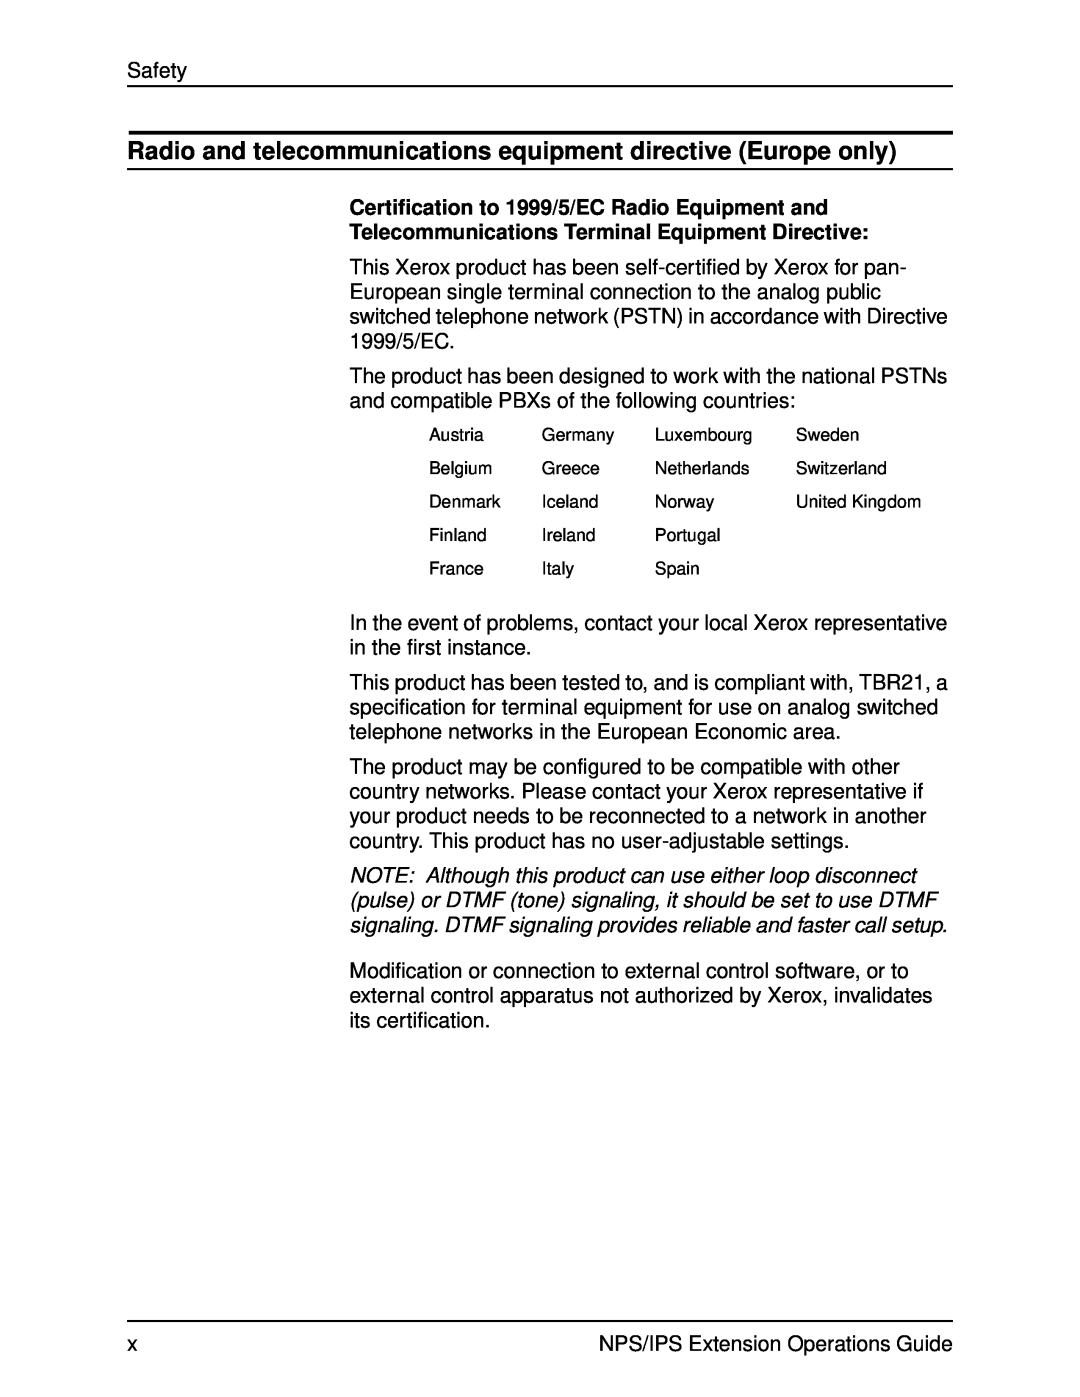 Xerox 2000 Series manual Certification to 1999/5/EC Radio Equipment and, Telecommunications Terminal Equipment Directive 